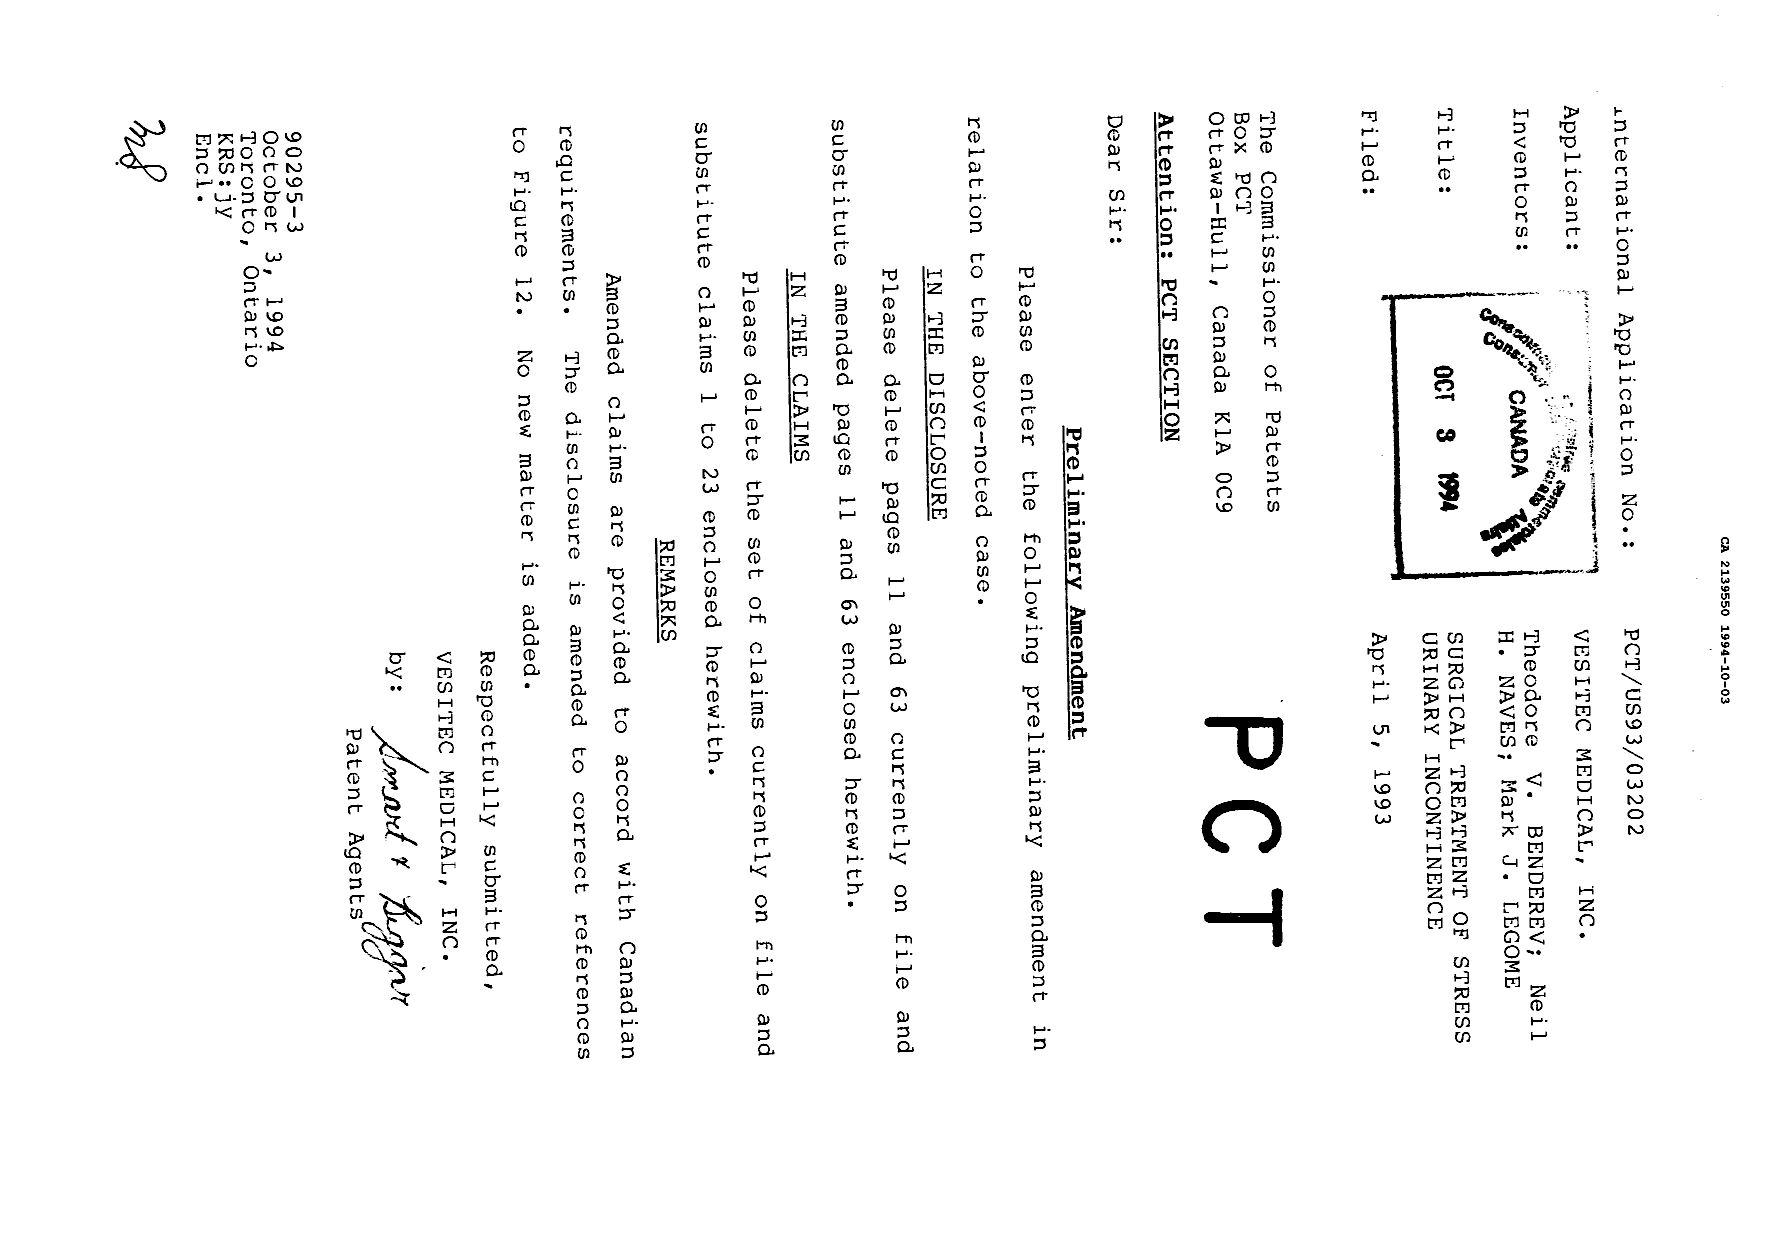 Canadian Patent Document 2139550. Prosecution Correspondence 19941003. Image 1 of 1